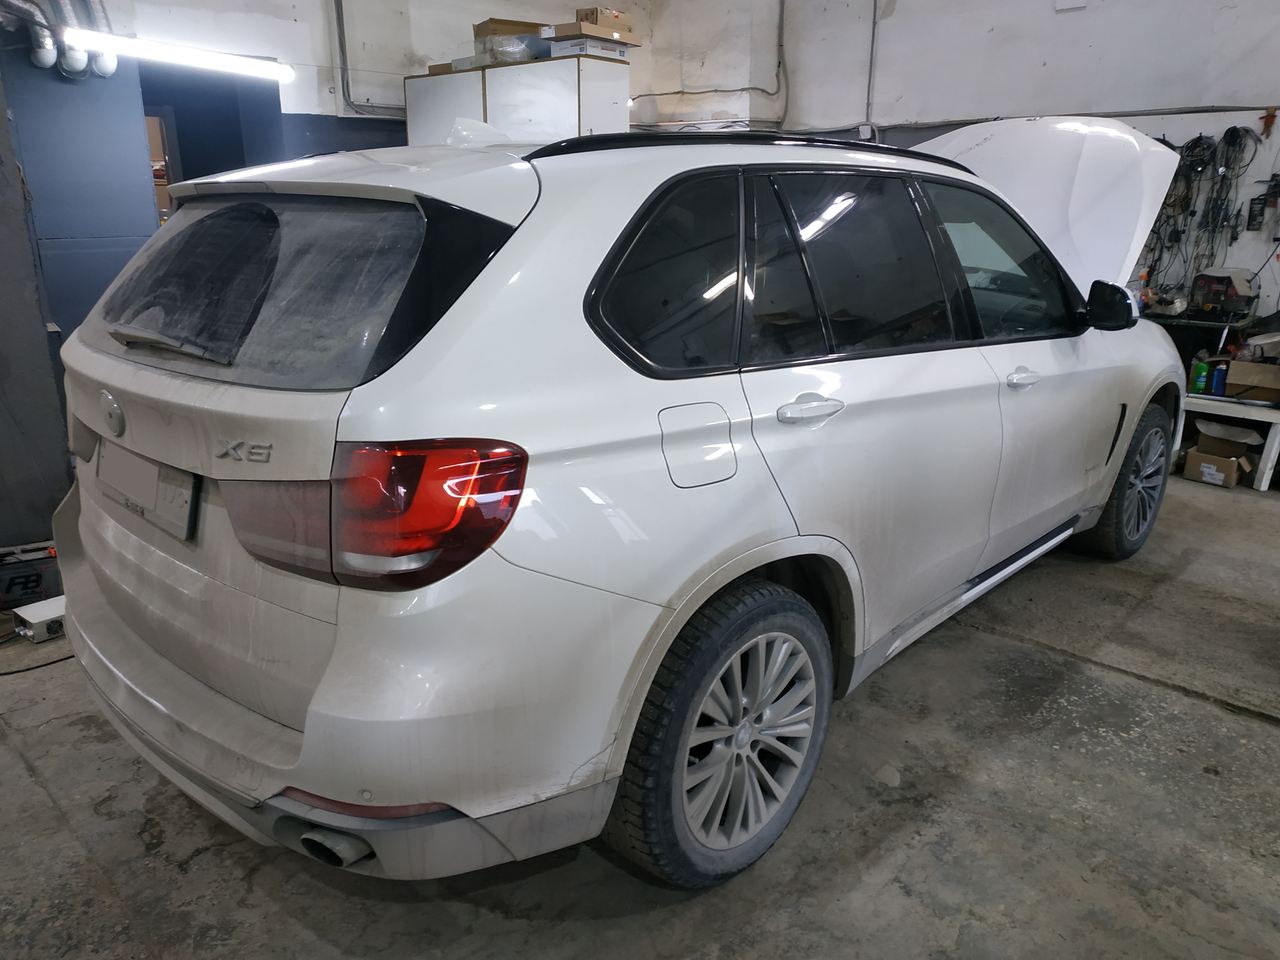 BMW Х5 F15 35i 2014 г.в. в автосервисе BMWupgrade Екатеринбург